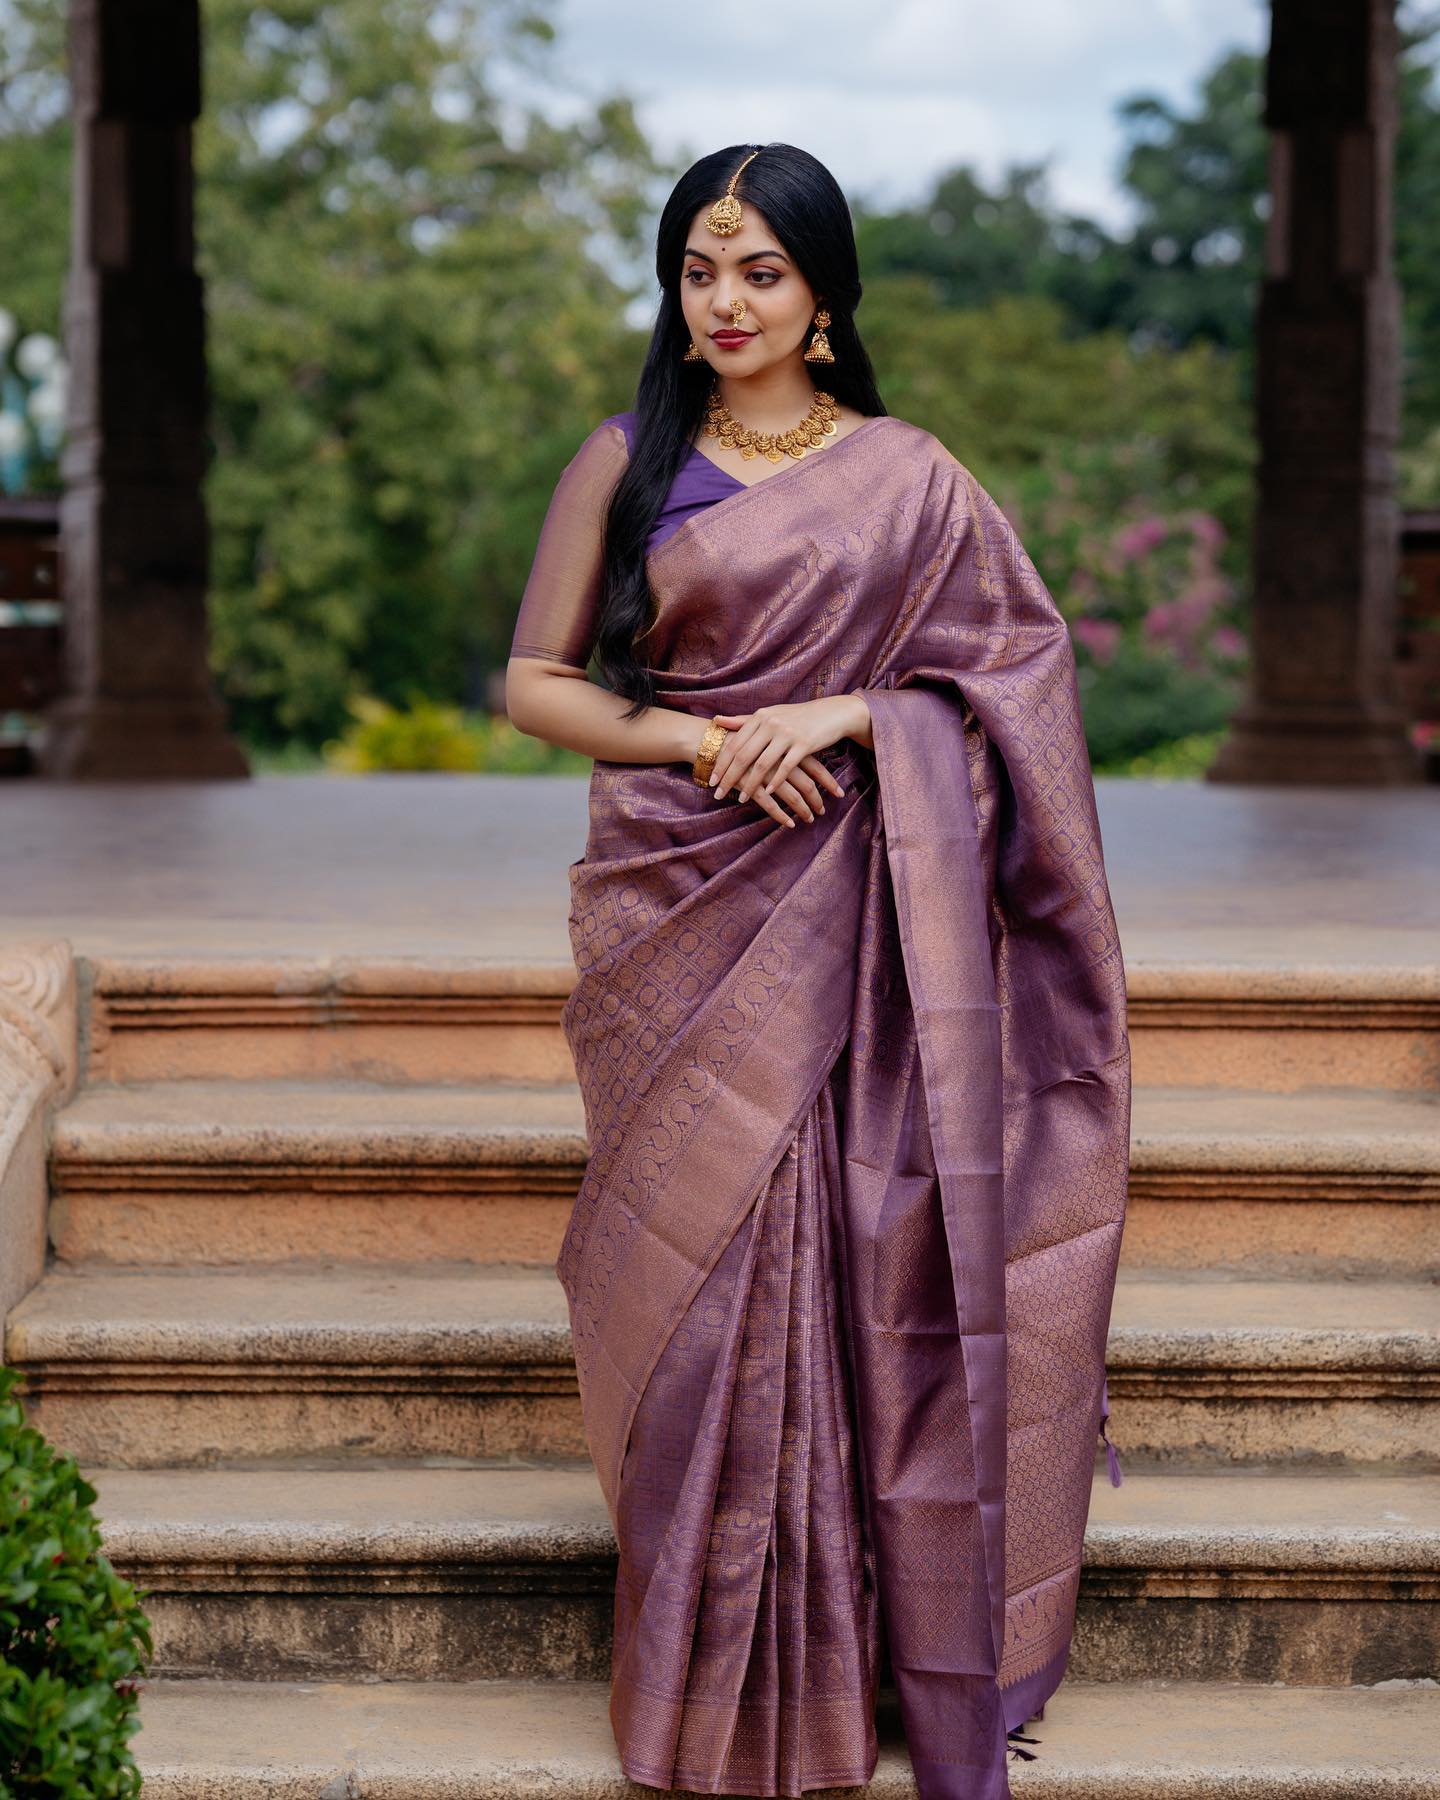 ahaana-krishna-in-thamburatti-style-saree-look-images-006